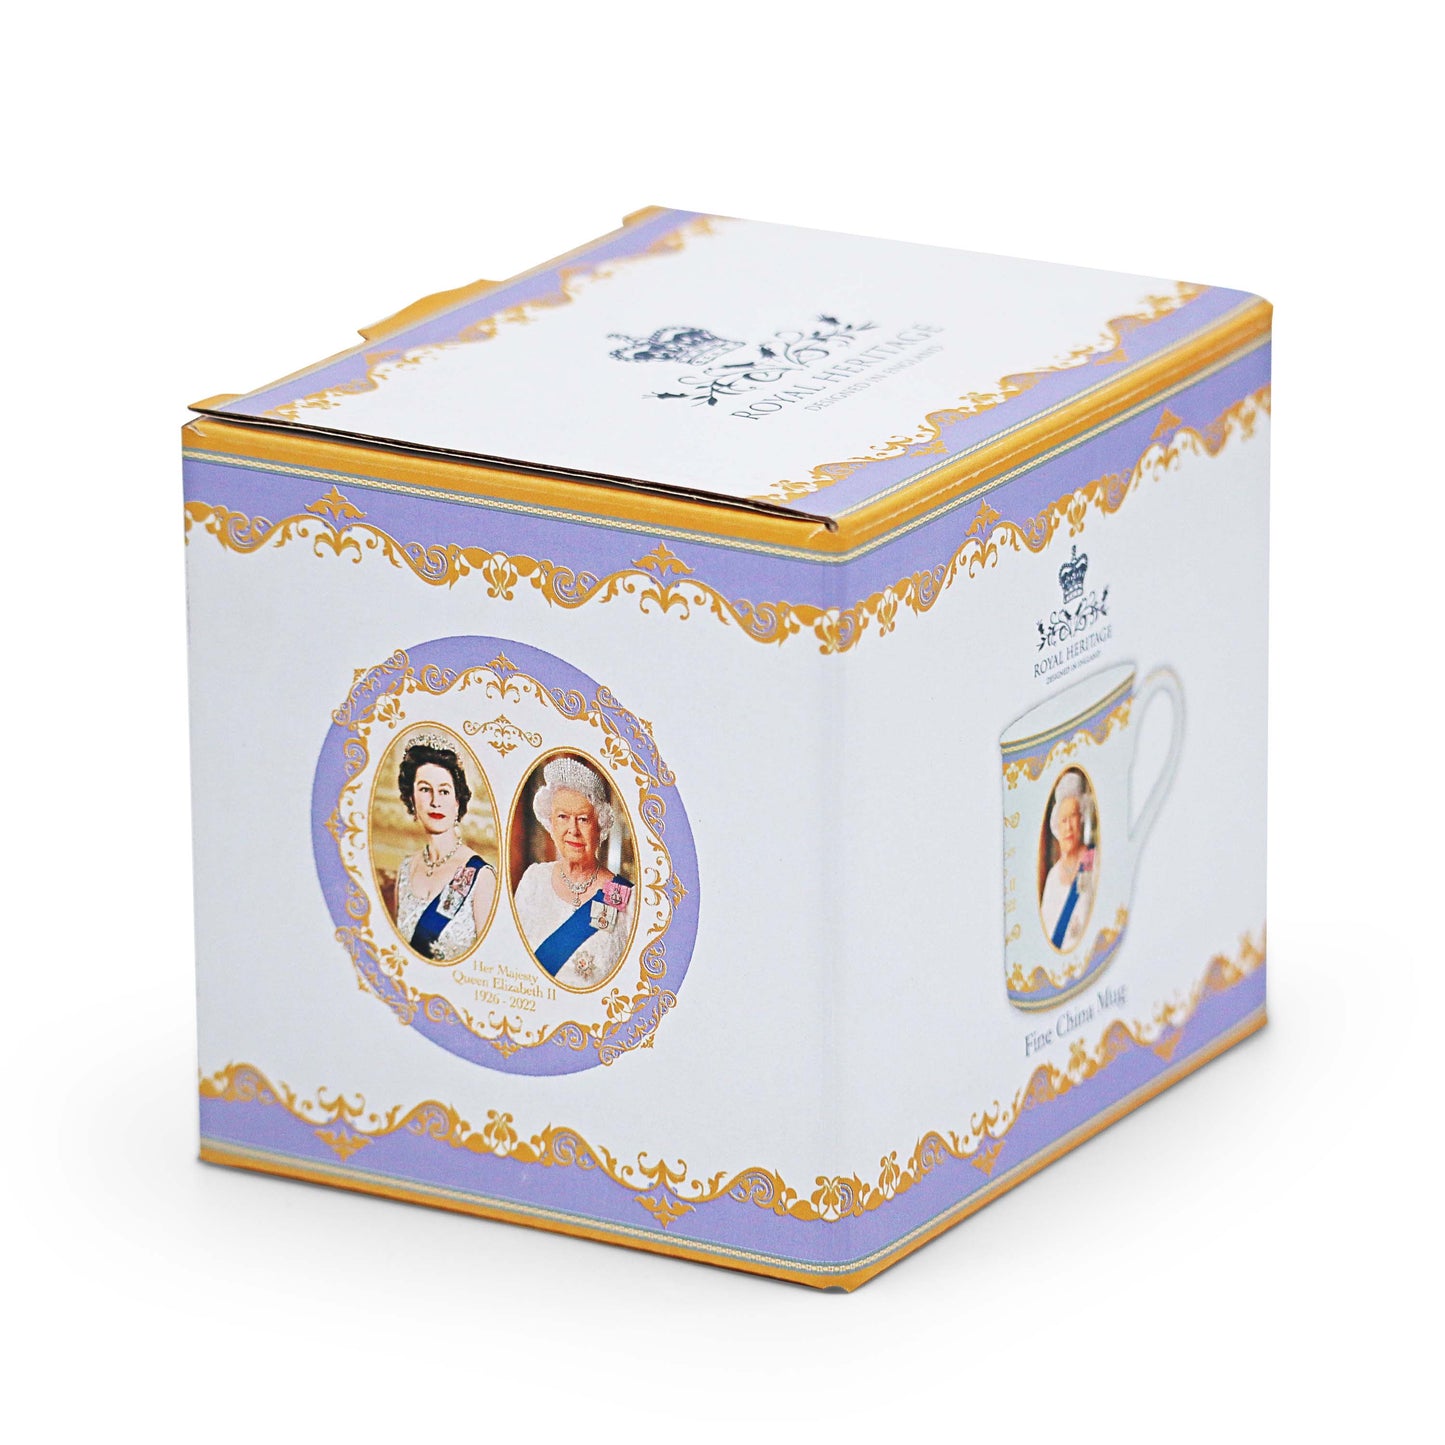 Her Majesty Queen Elizabeth II Commemorative Boxed Mug - London Gift Royal Gift